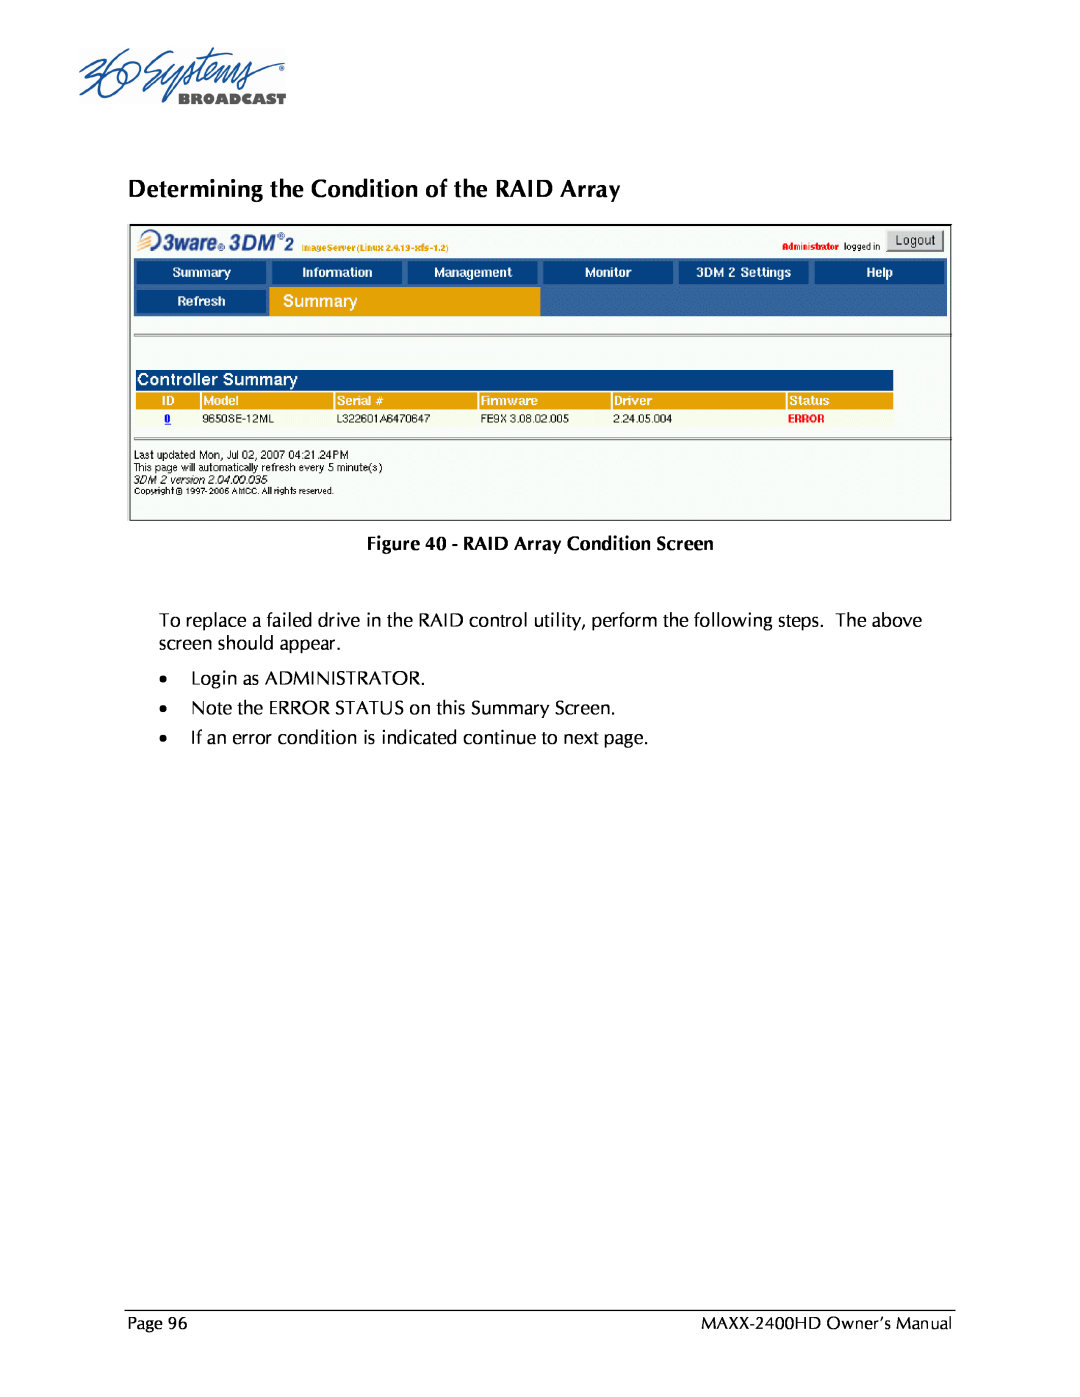 Maxxsonics MAXX-2400HD Determining the Condition of the RAID Array, RAID Array Condition Screen, •Login as ADMINISTRATOR 